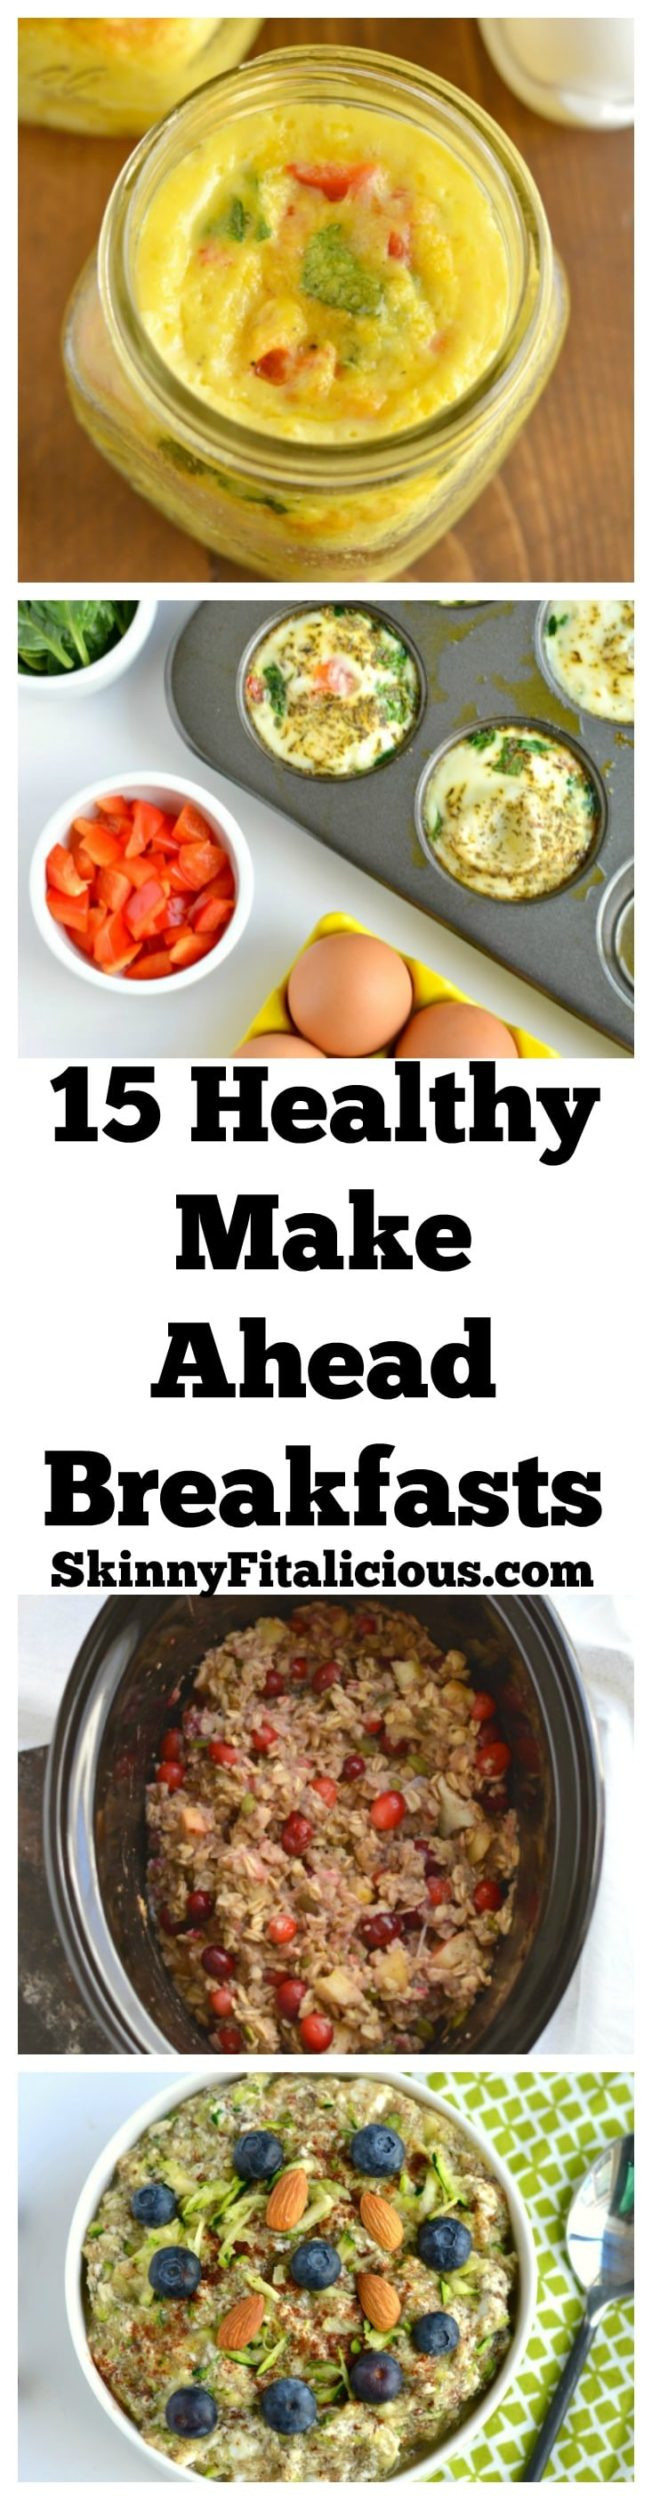 Make Ahead Breakfast Healthy
 15 Healthy Make Ahead Breakfasts Skinny Fitalicious